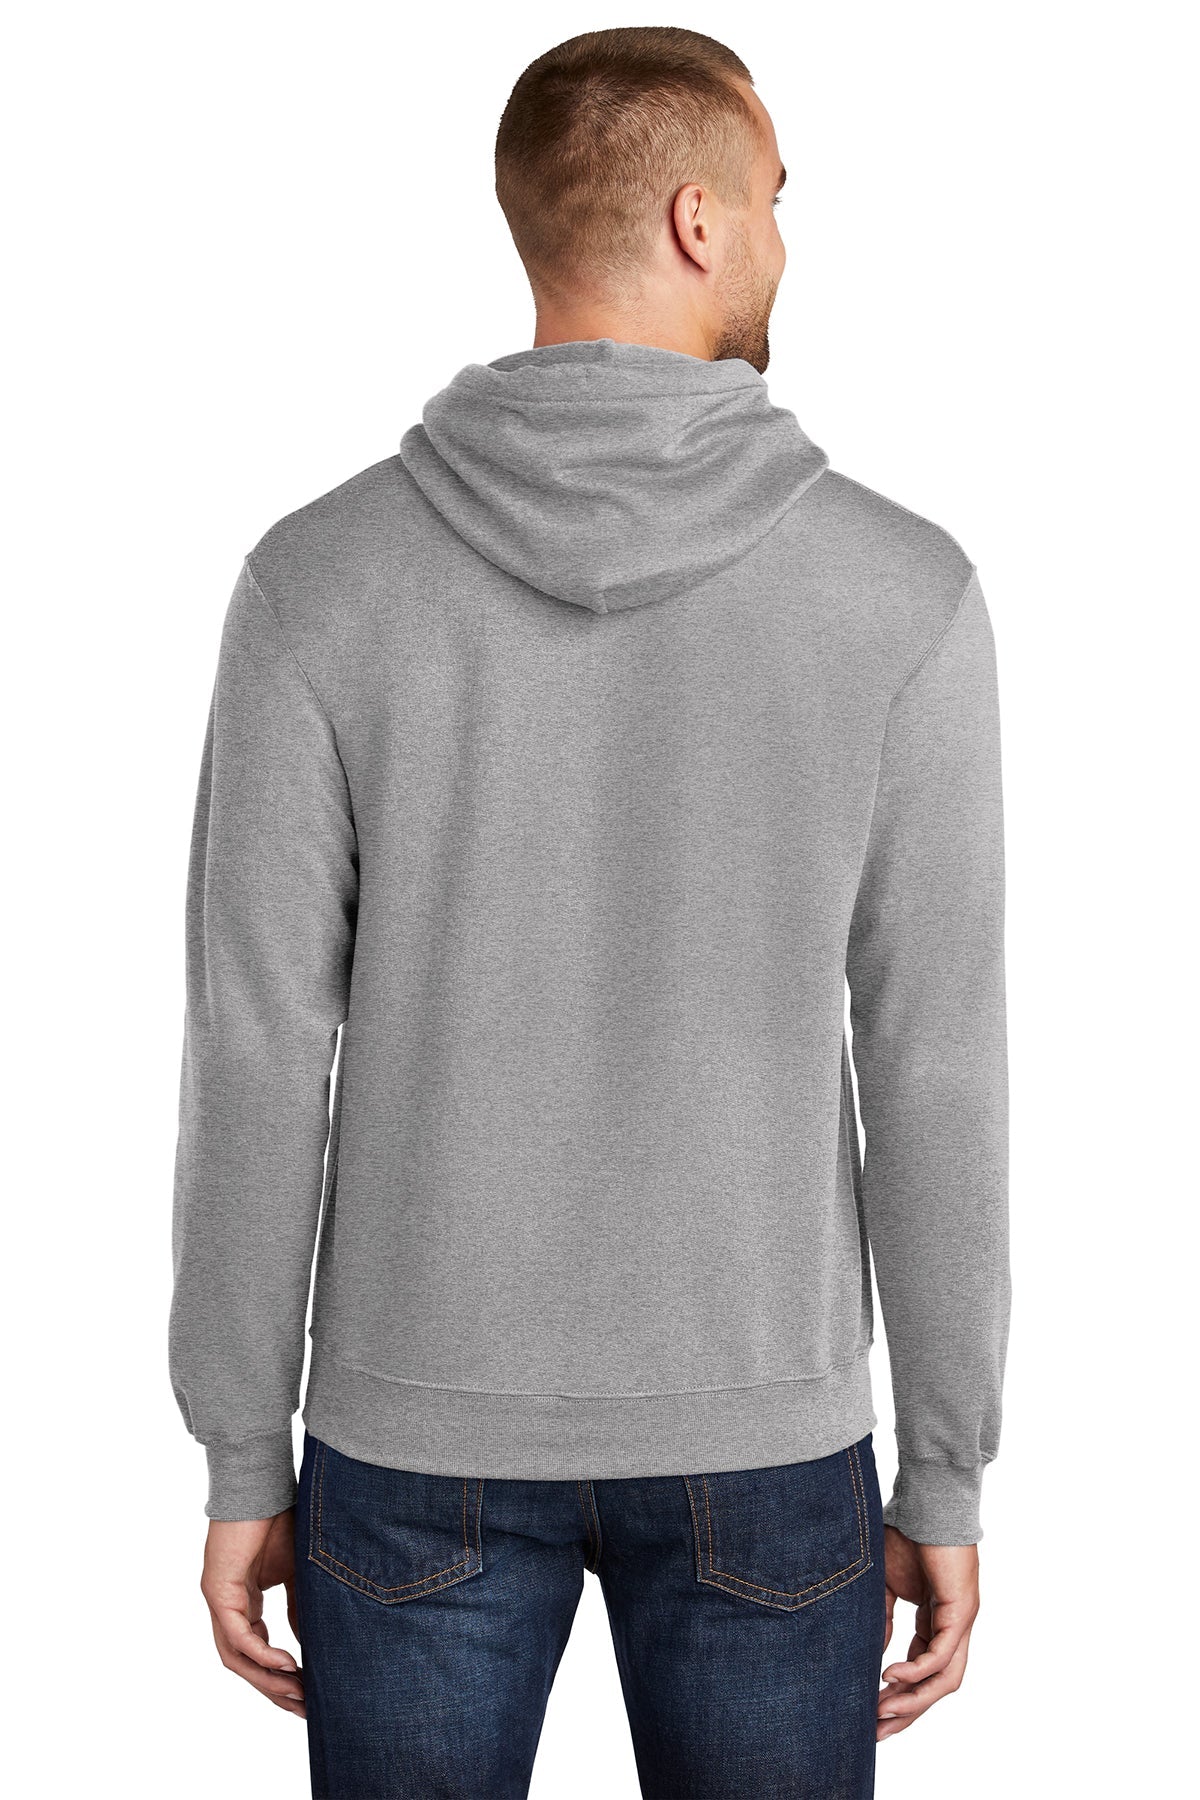 Port & Company Tall Core Fleece Pullover Hooded Sweatshirt PC78HT Athletic Heather